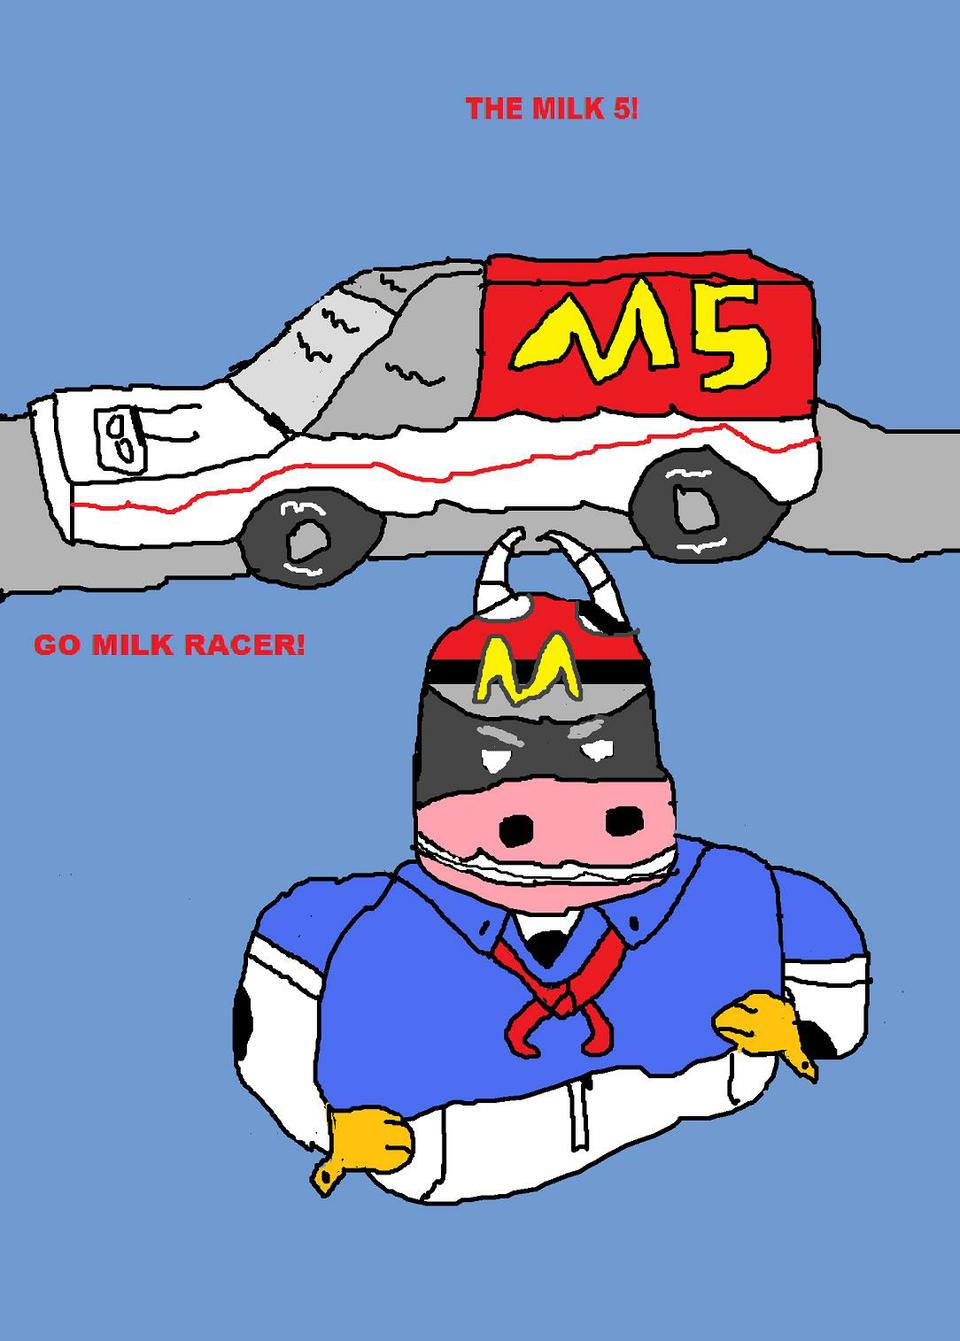 Milk racer!